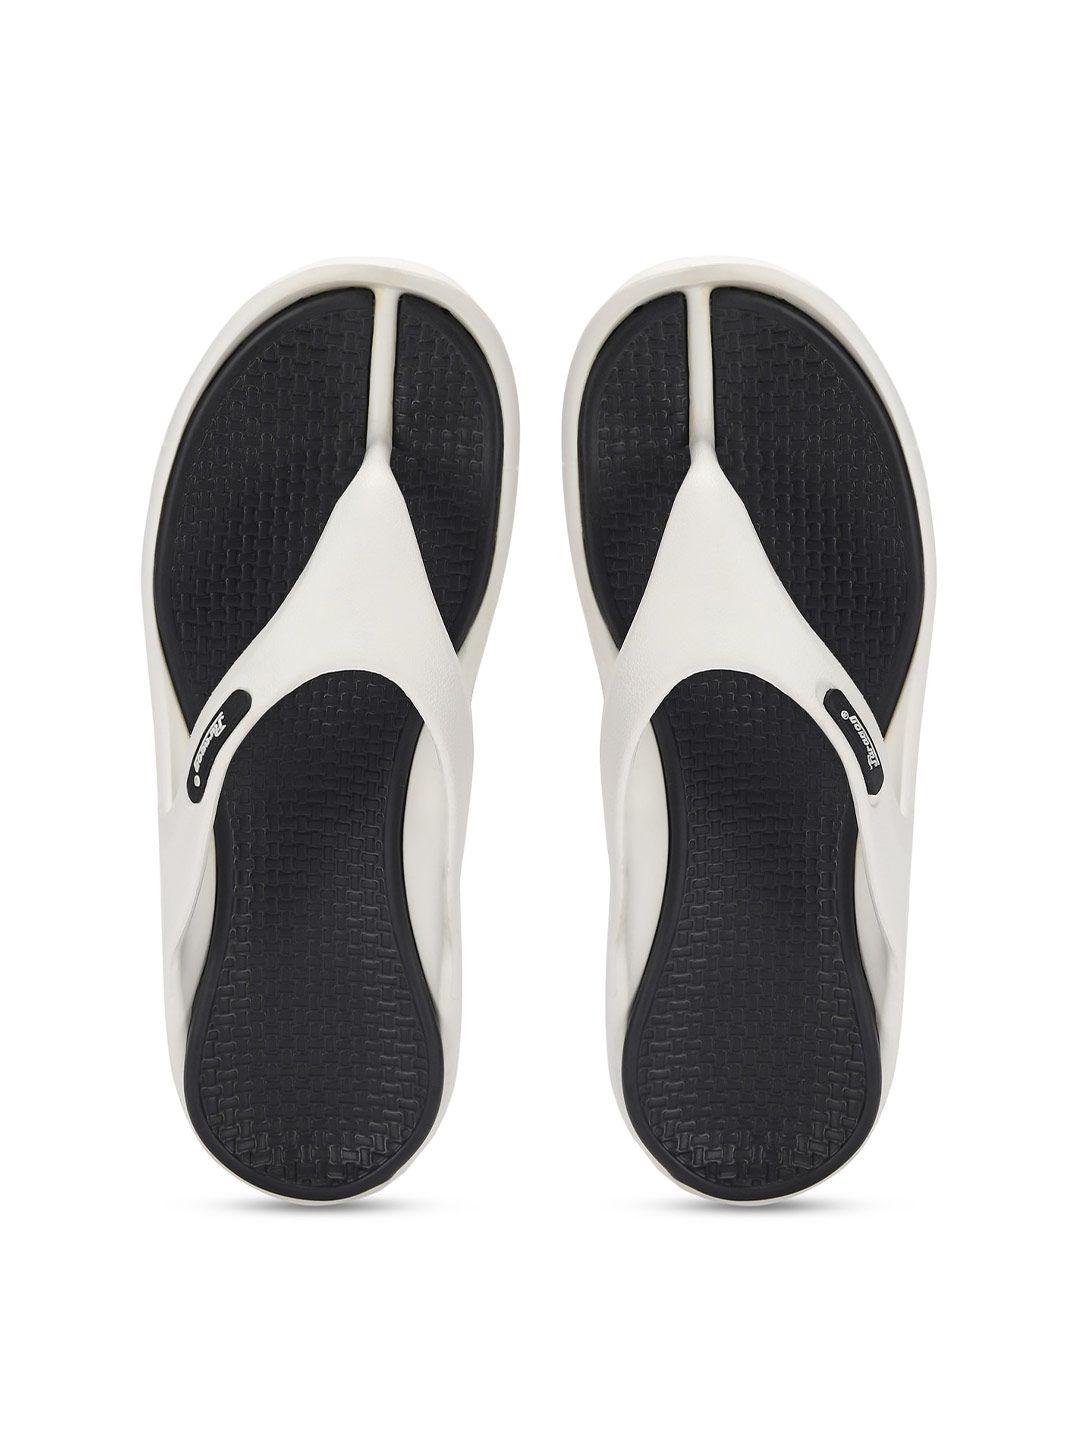 paragon men black & white colourblocked thong flip-flops